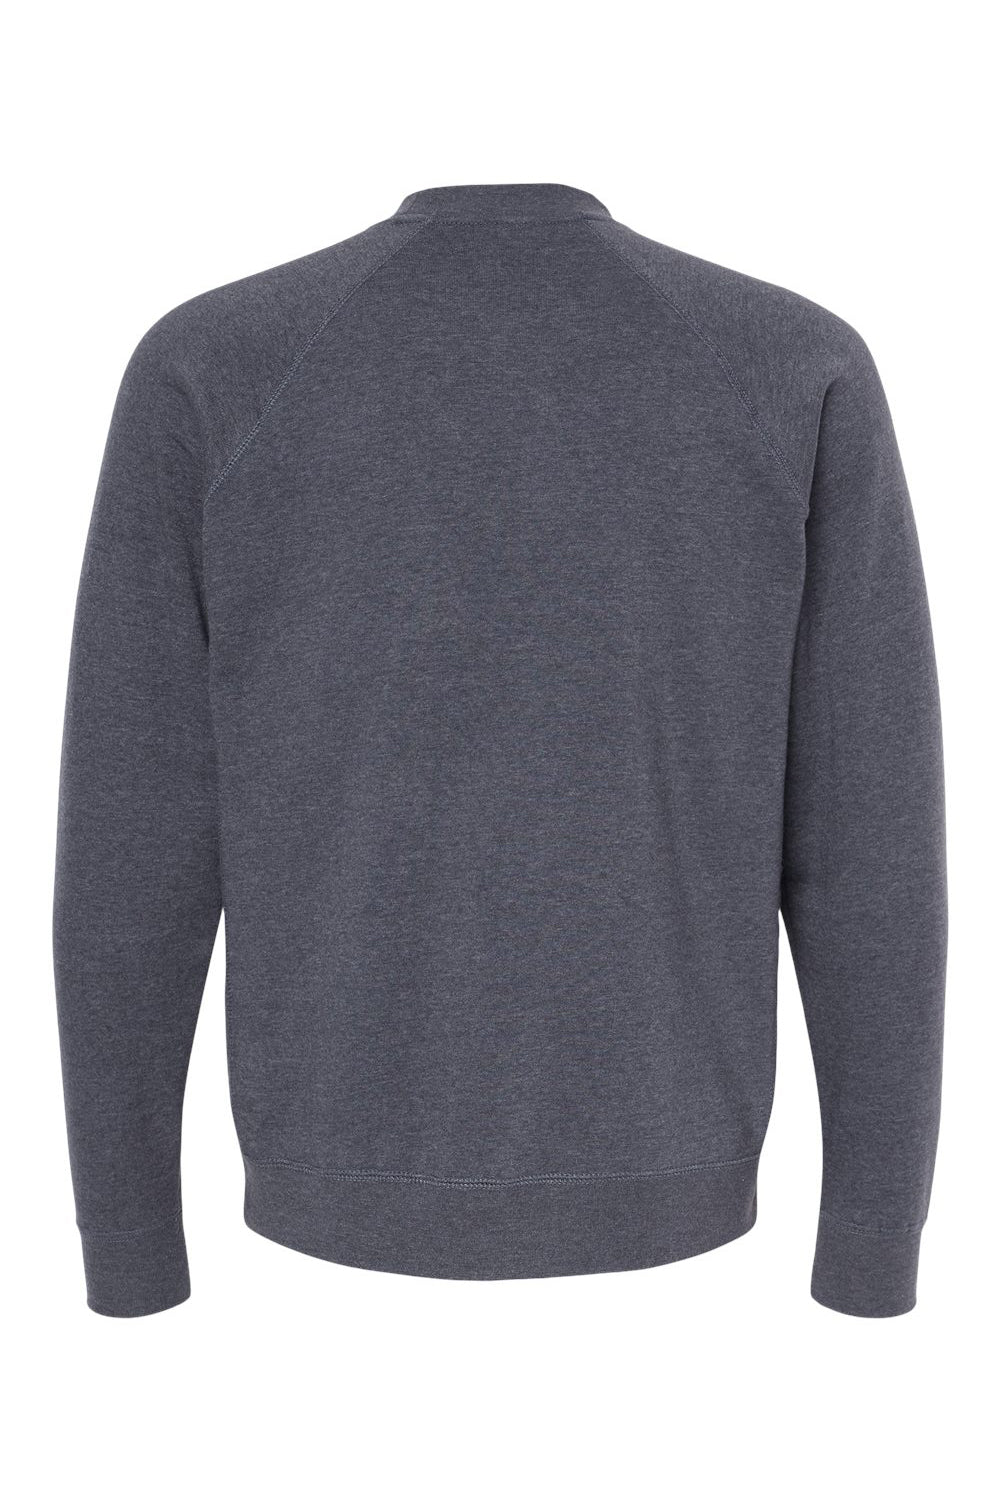 Independent Trading Co. PRM30SBC Mens Special Blend Crewneck Raglan Sweatshirt Midnight Navy Blue Flat Back